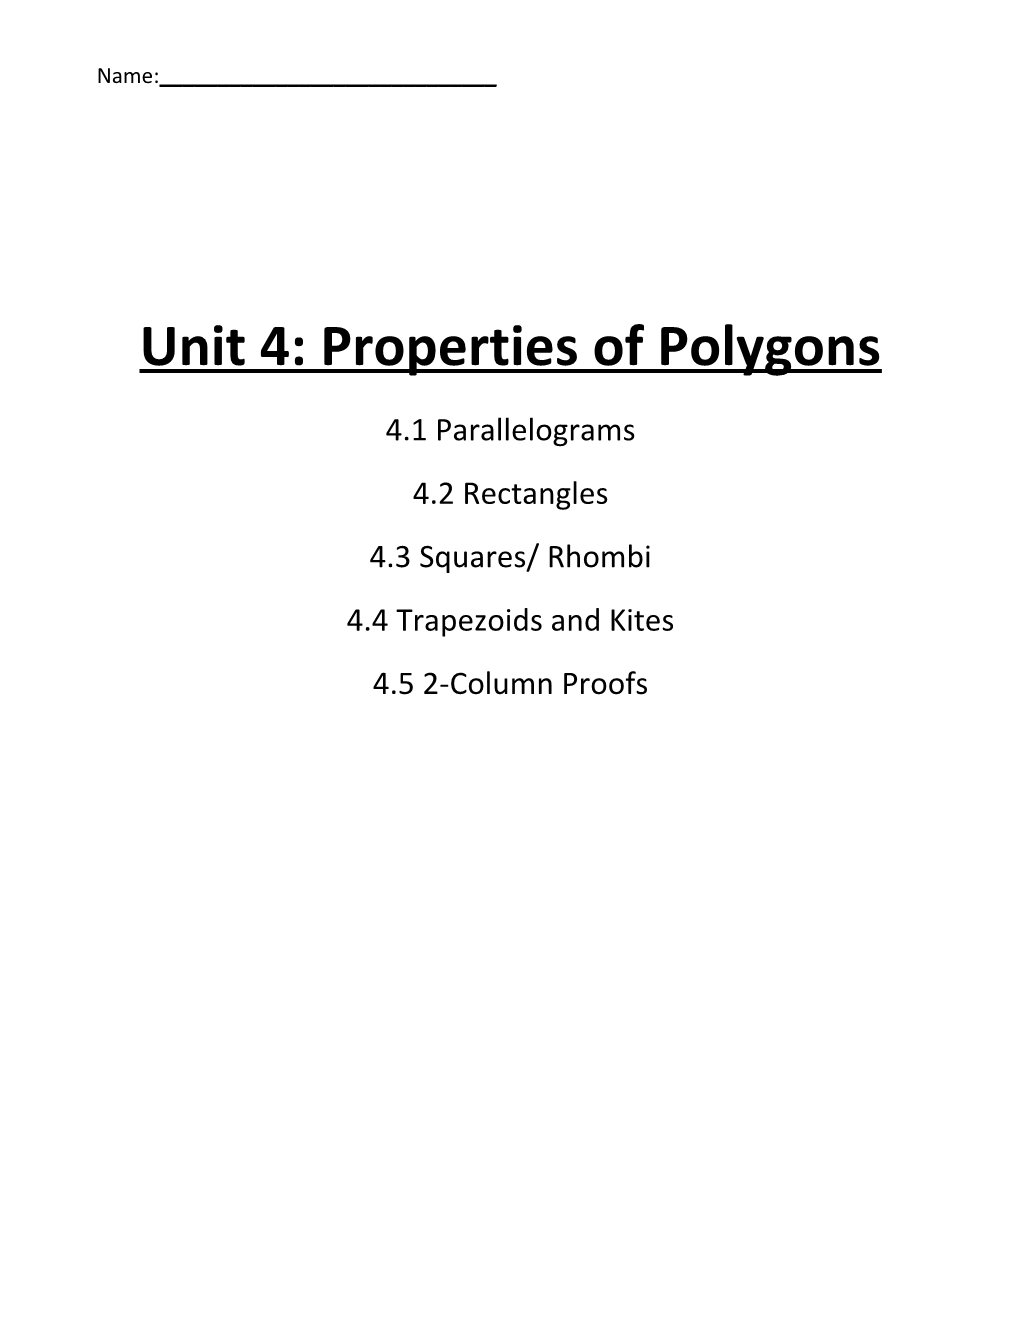 Unit 4: Properties of Polygons